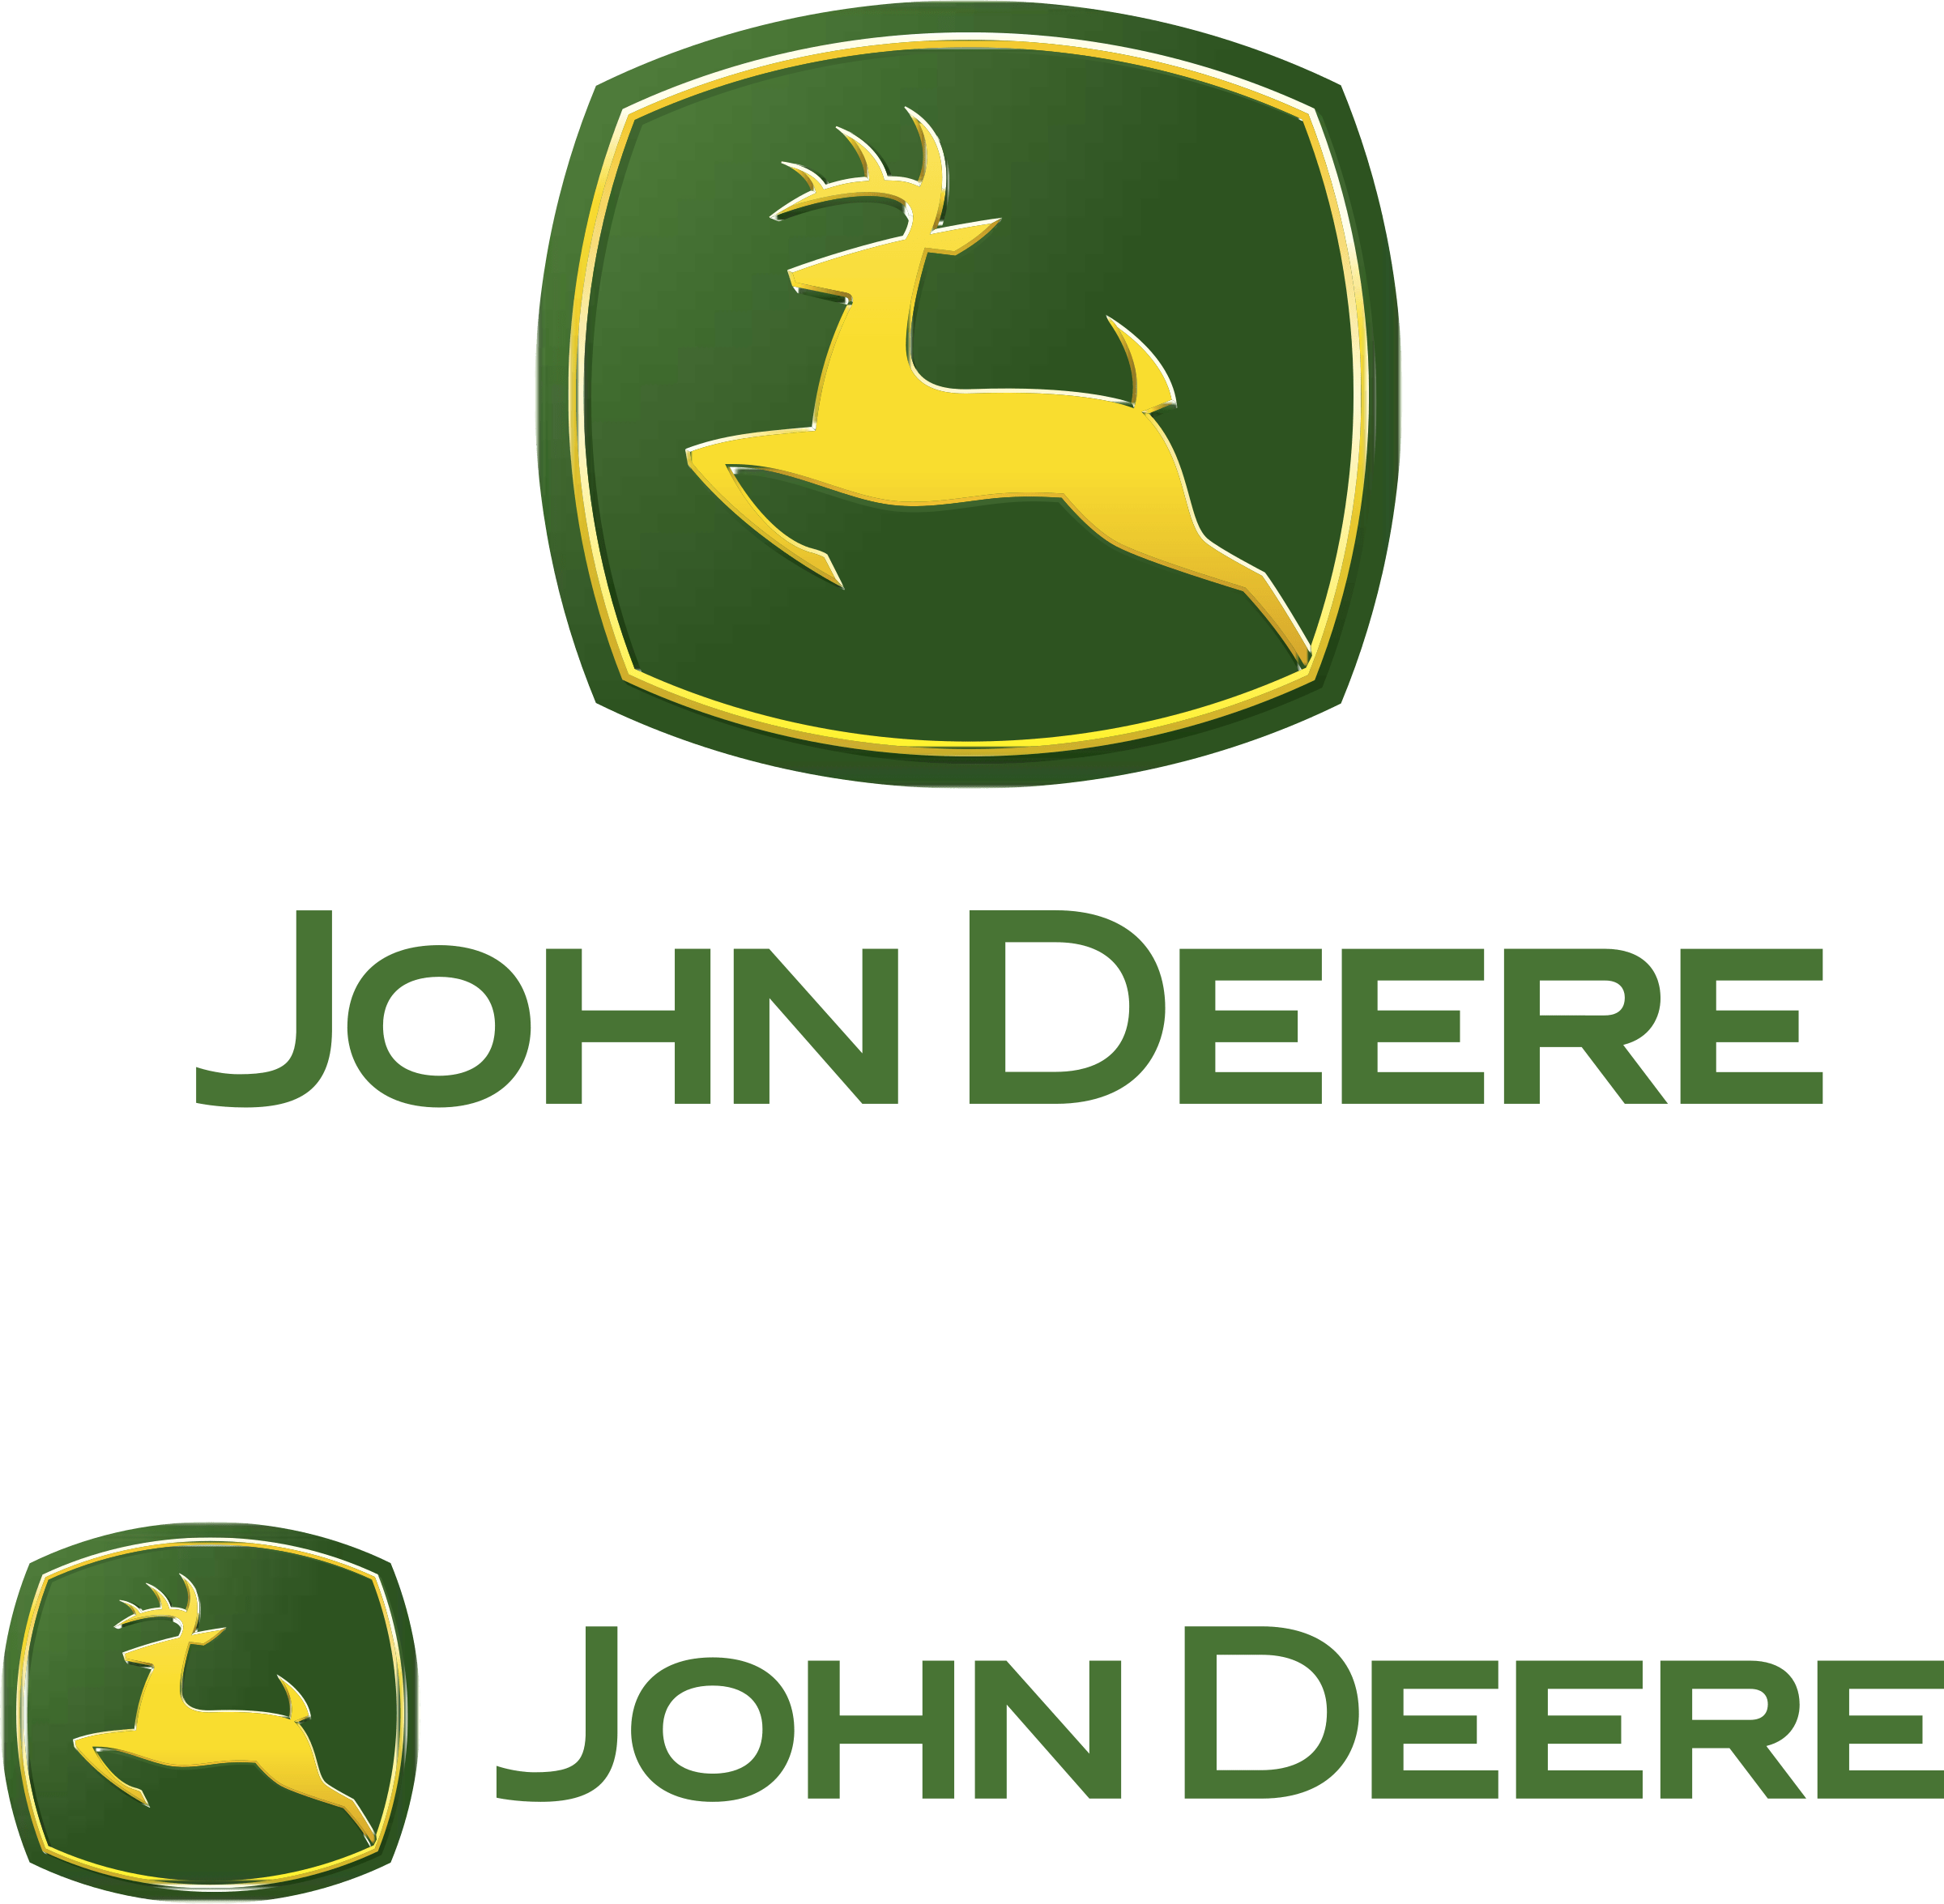 Jphn Deere Logo - John Deere Logo PNG Transparent & SVG Vector - Freebie Supply